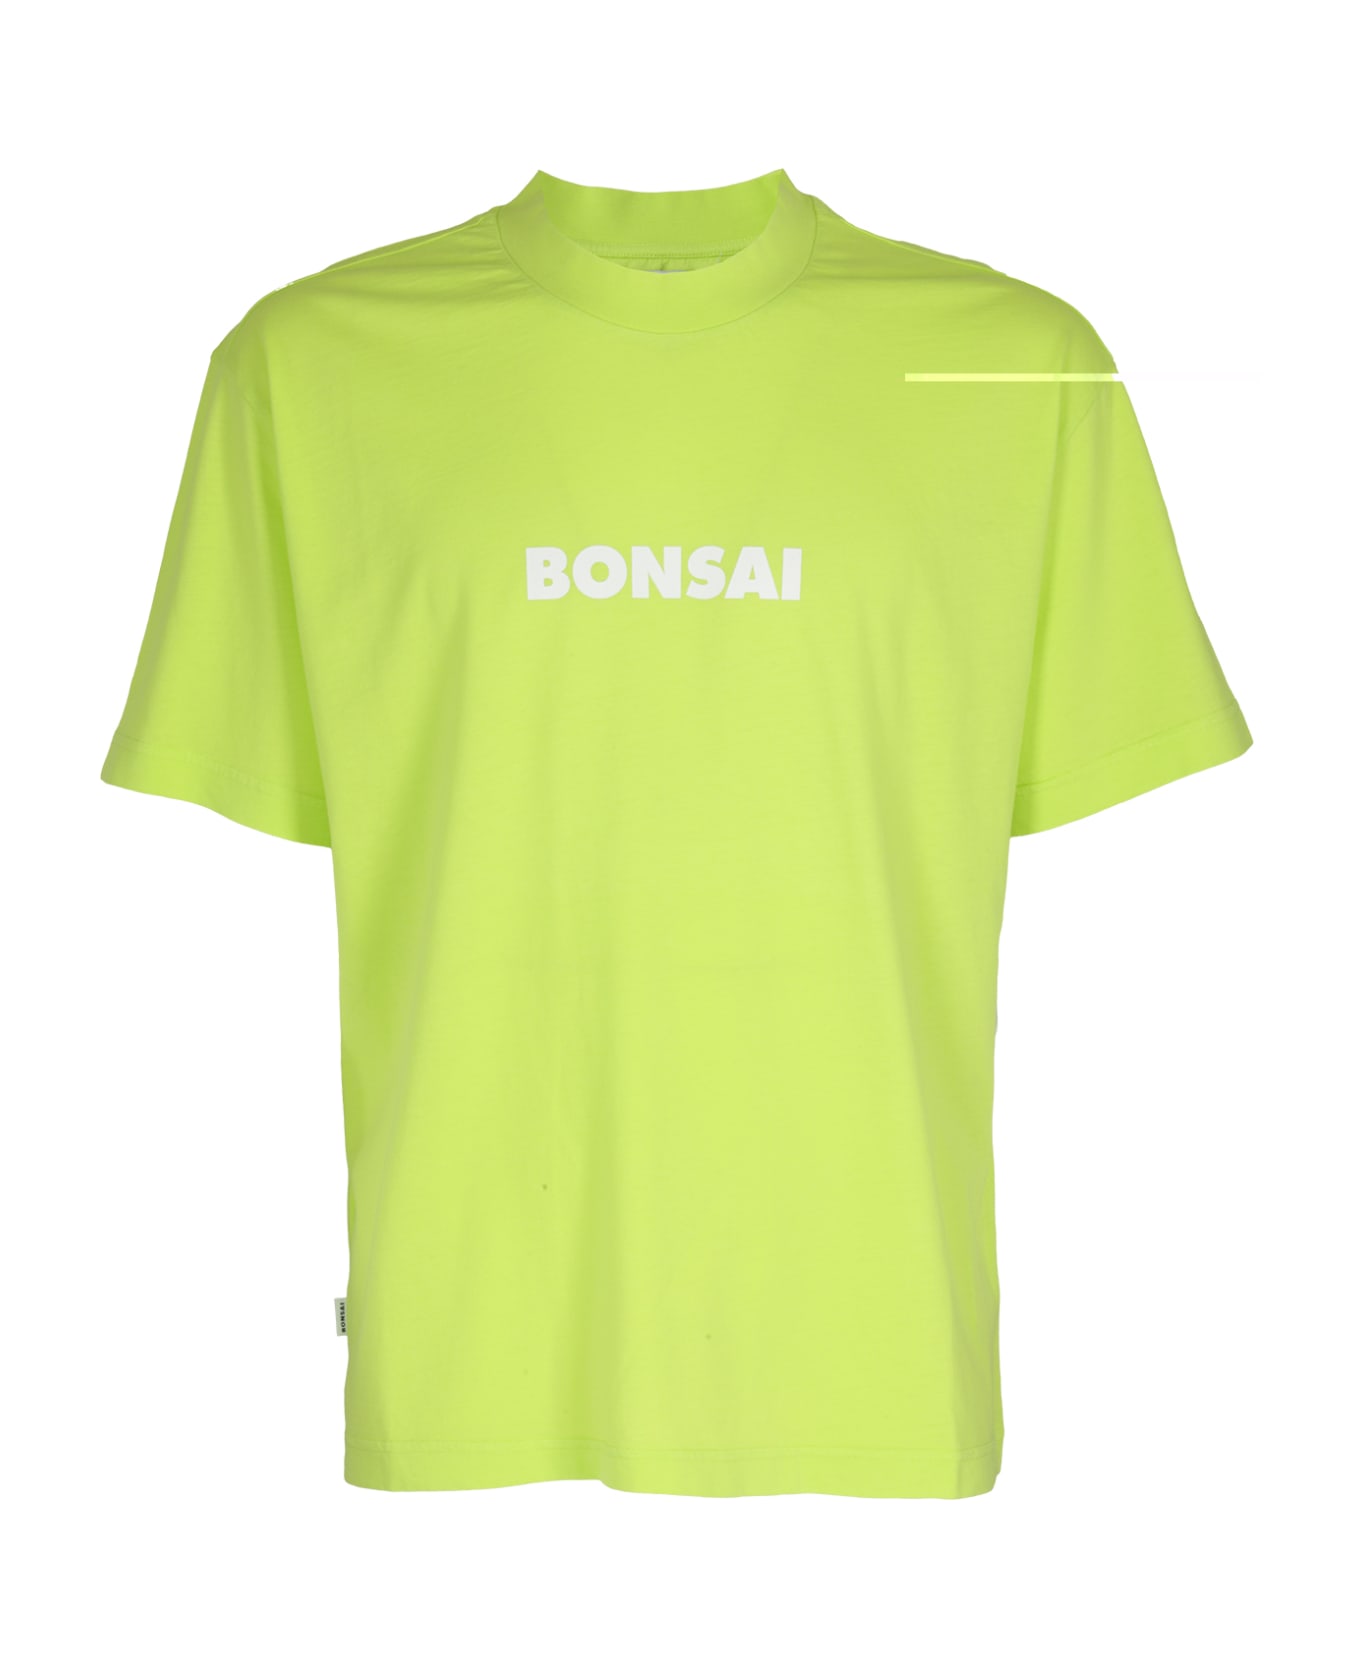 Bonsai Regular Fit Tee, Printed Classic Logo - Acid Green Acdgre